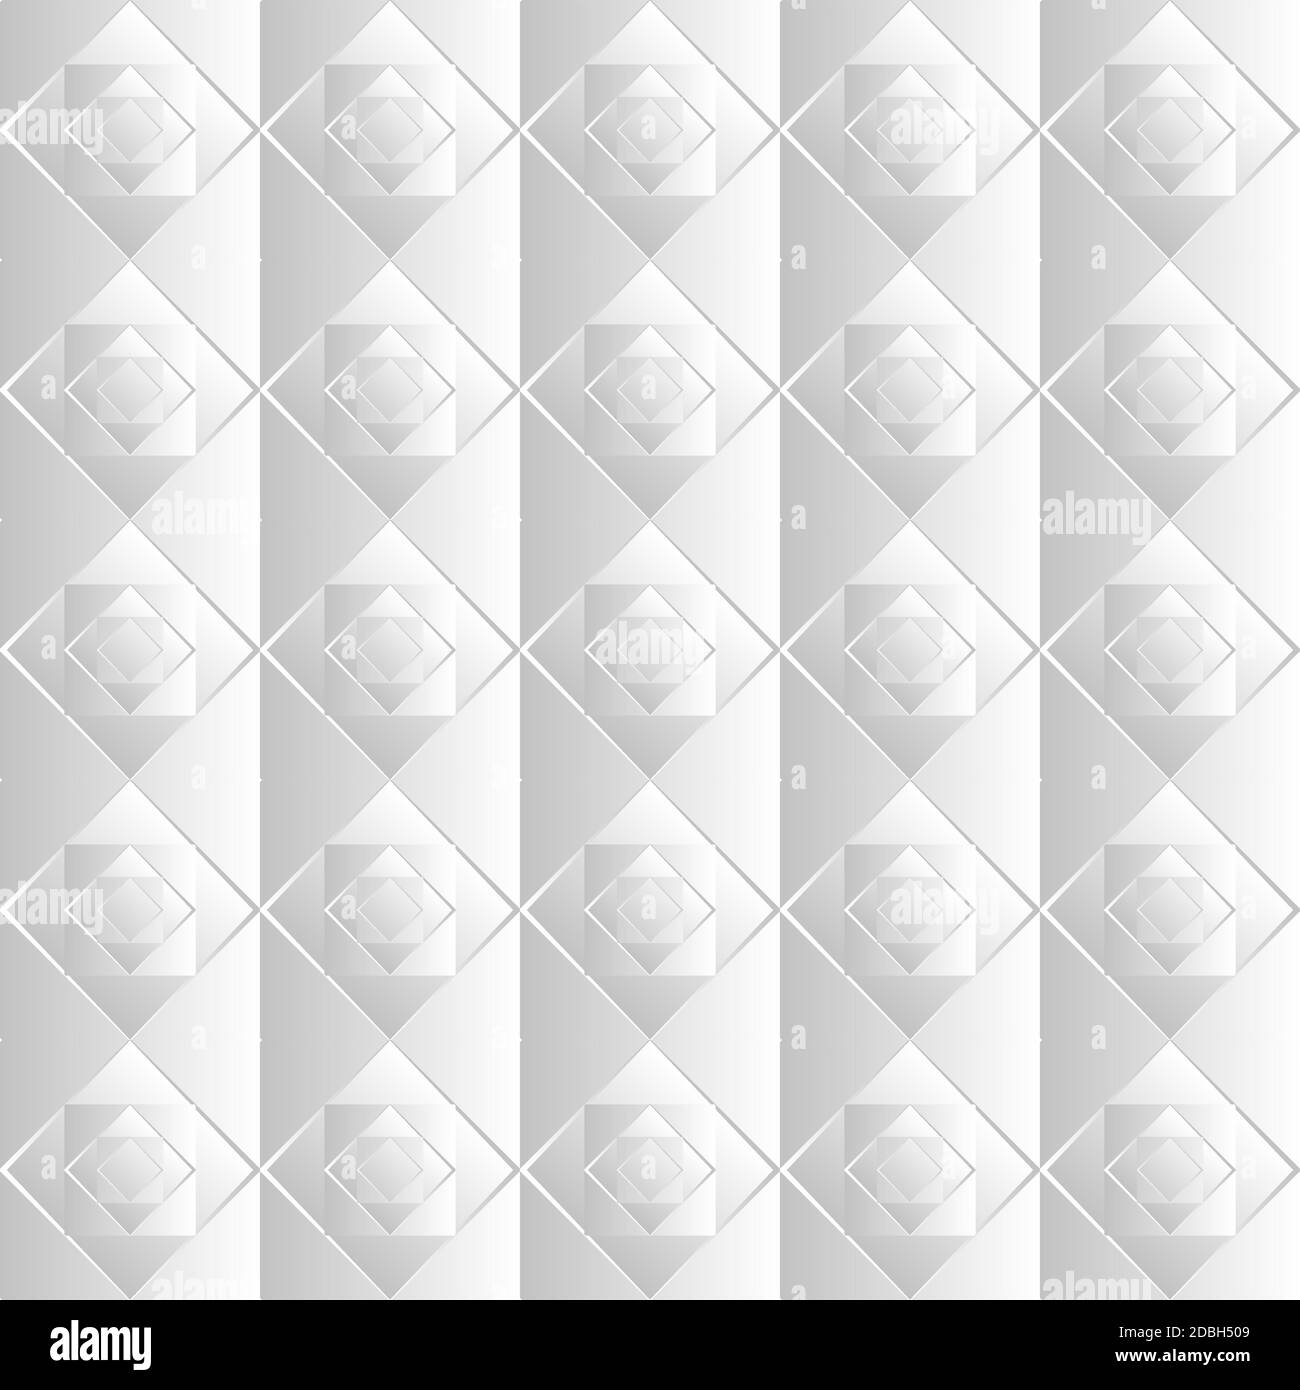 Nahtloses Muster von Rauten im Papierschnitt-Stil. Vektorgrafik Stock Vektor